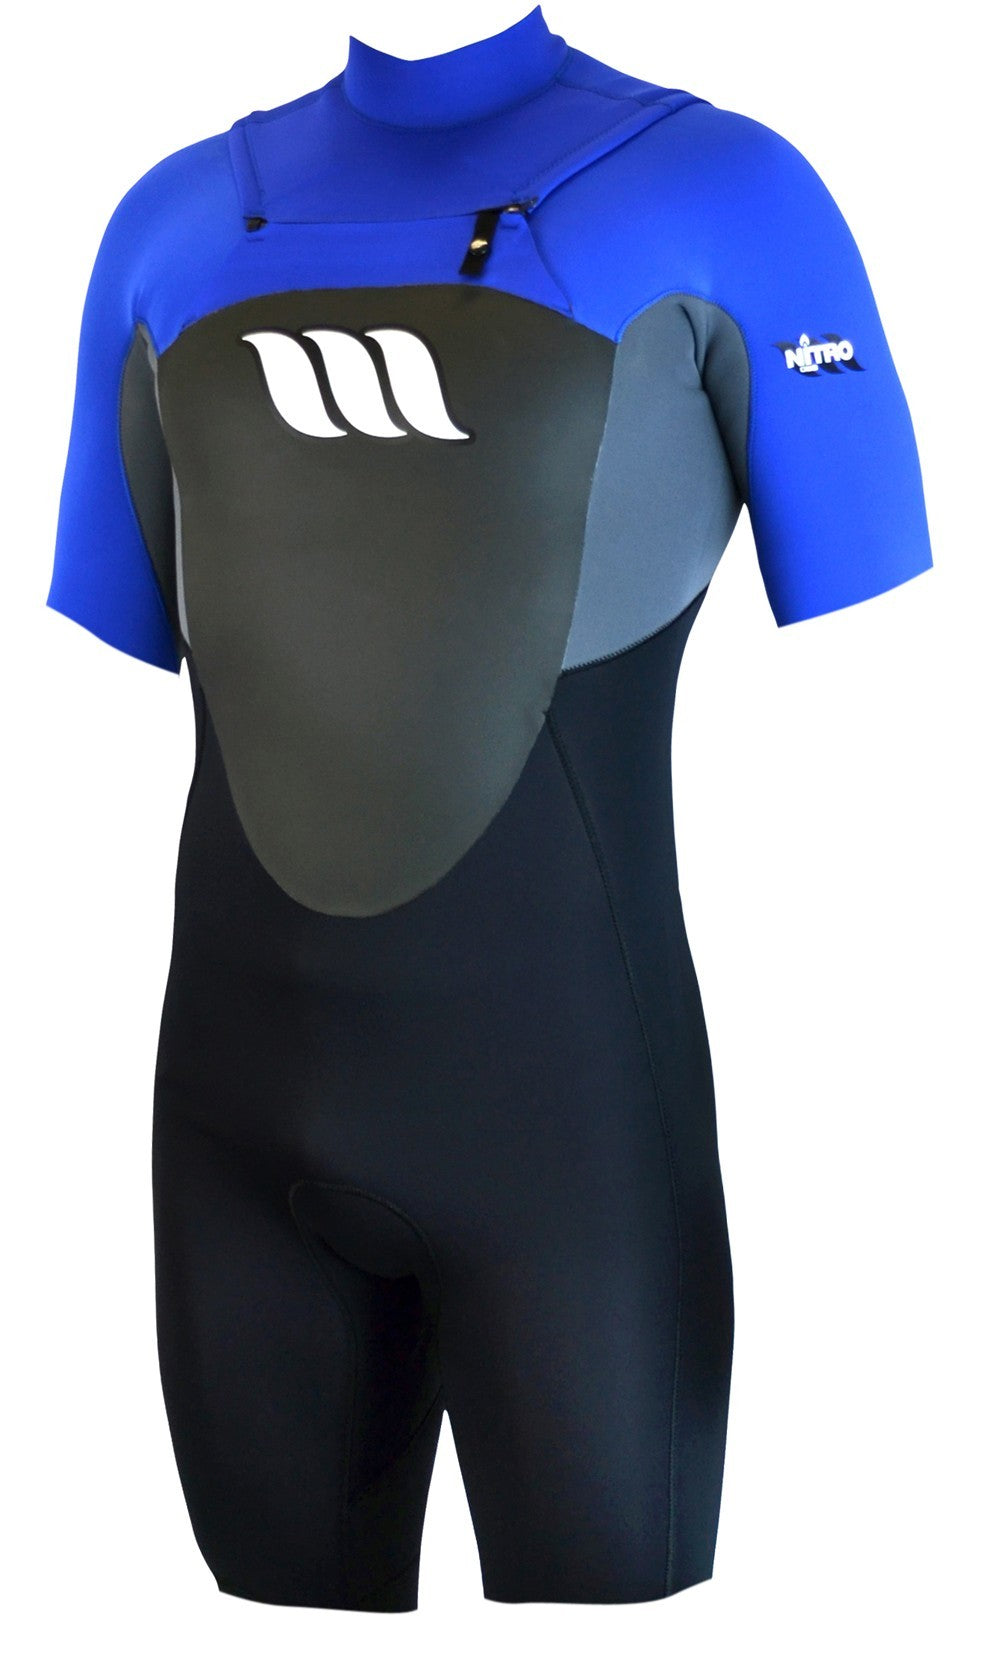 WEST - Surf wetsuit - Nitro Shorty 2/2mm front zip - Blue / Charcoal